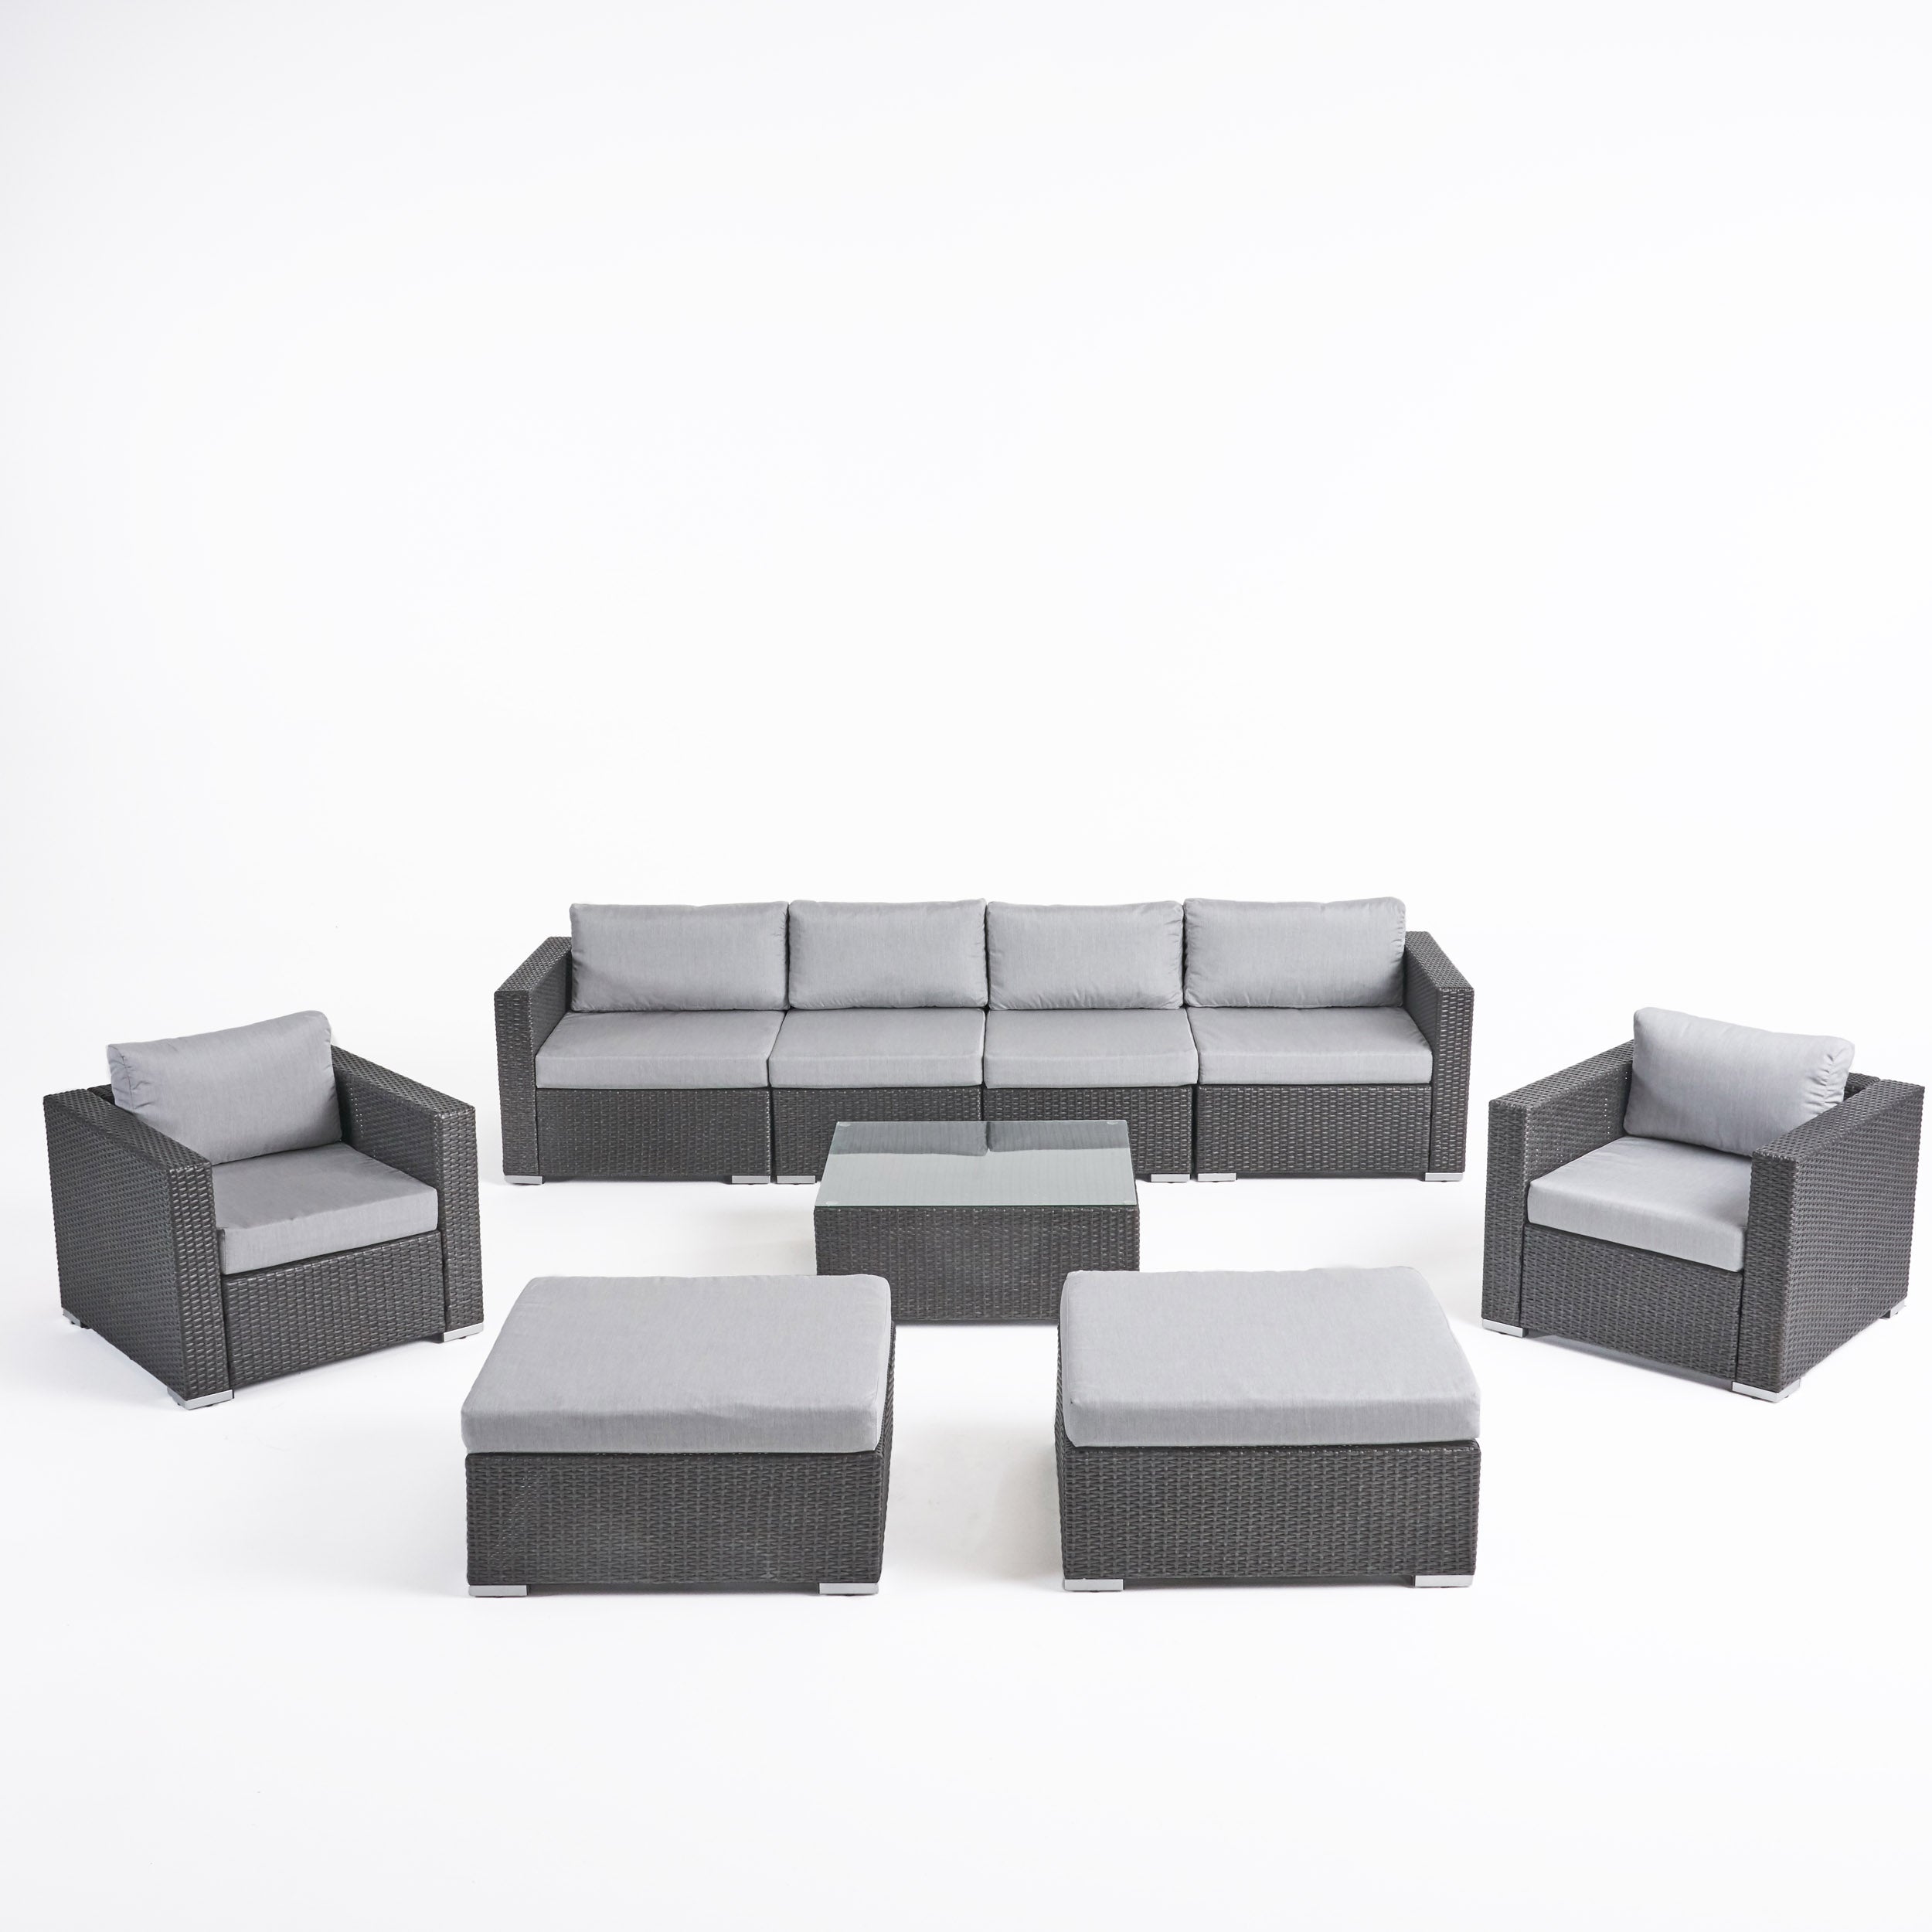 Kyra Outdoor 6 Seater Wicker Modular Sectional Sofa Set with Sunbrella Cushions Gray Canvas Granite